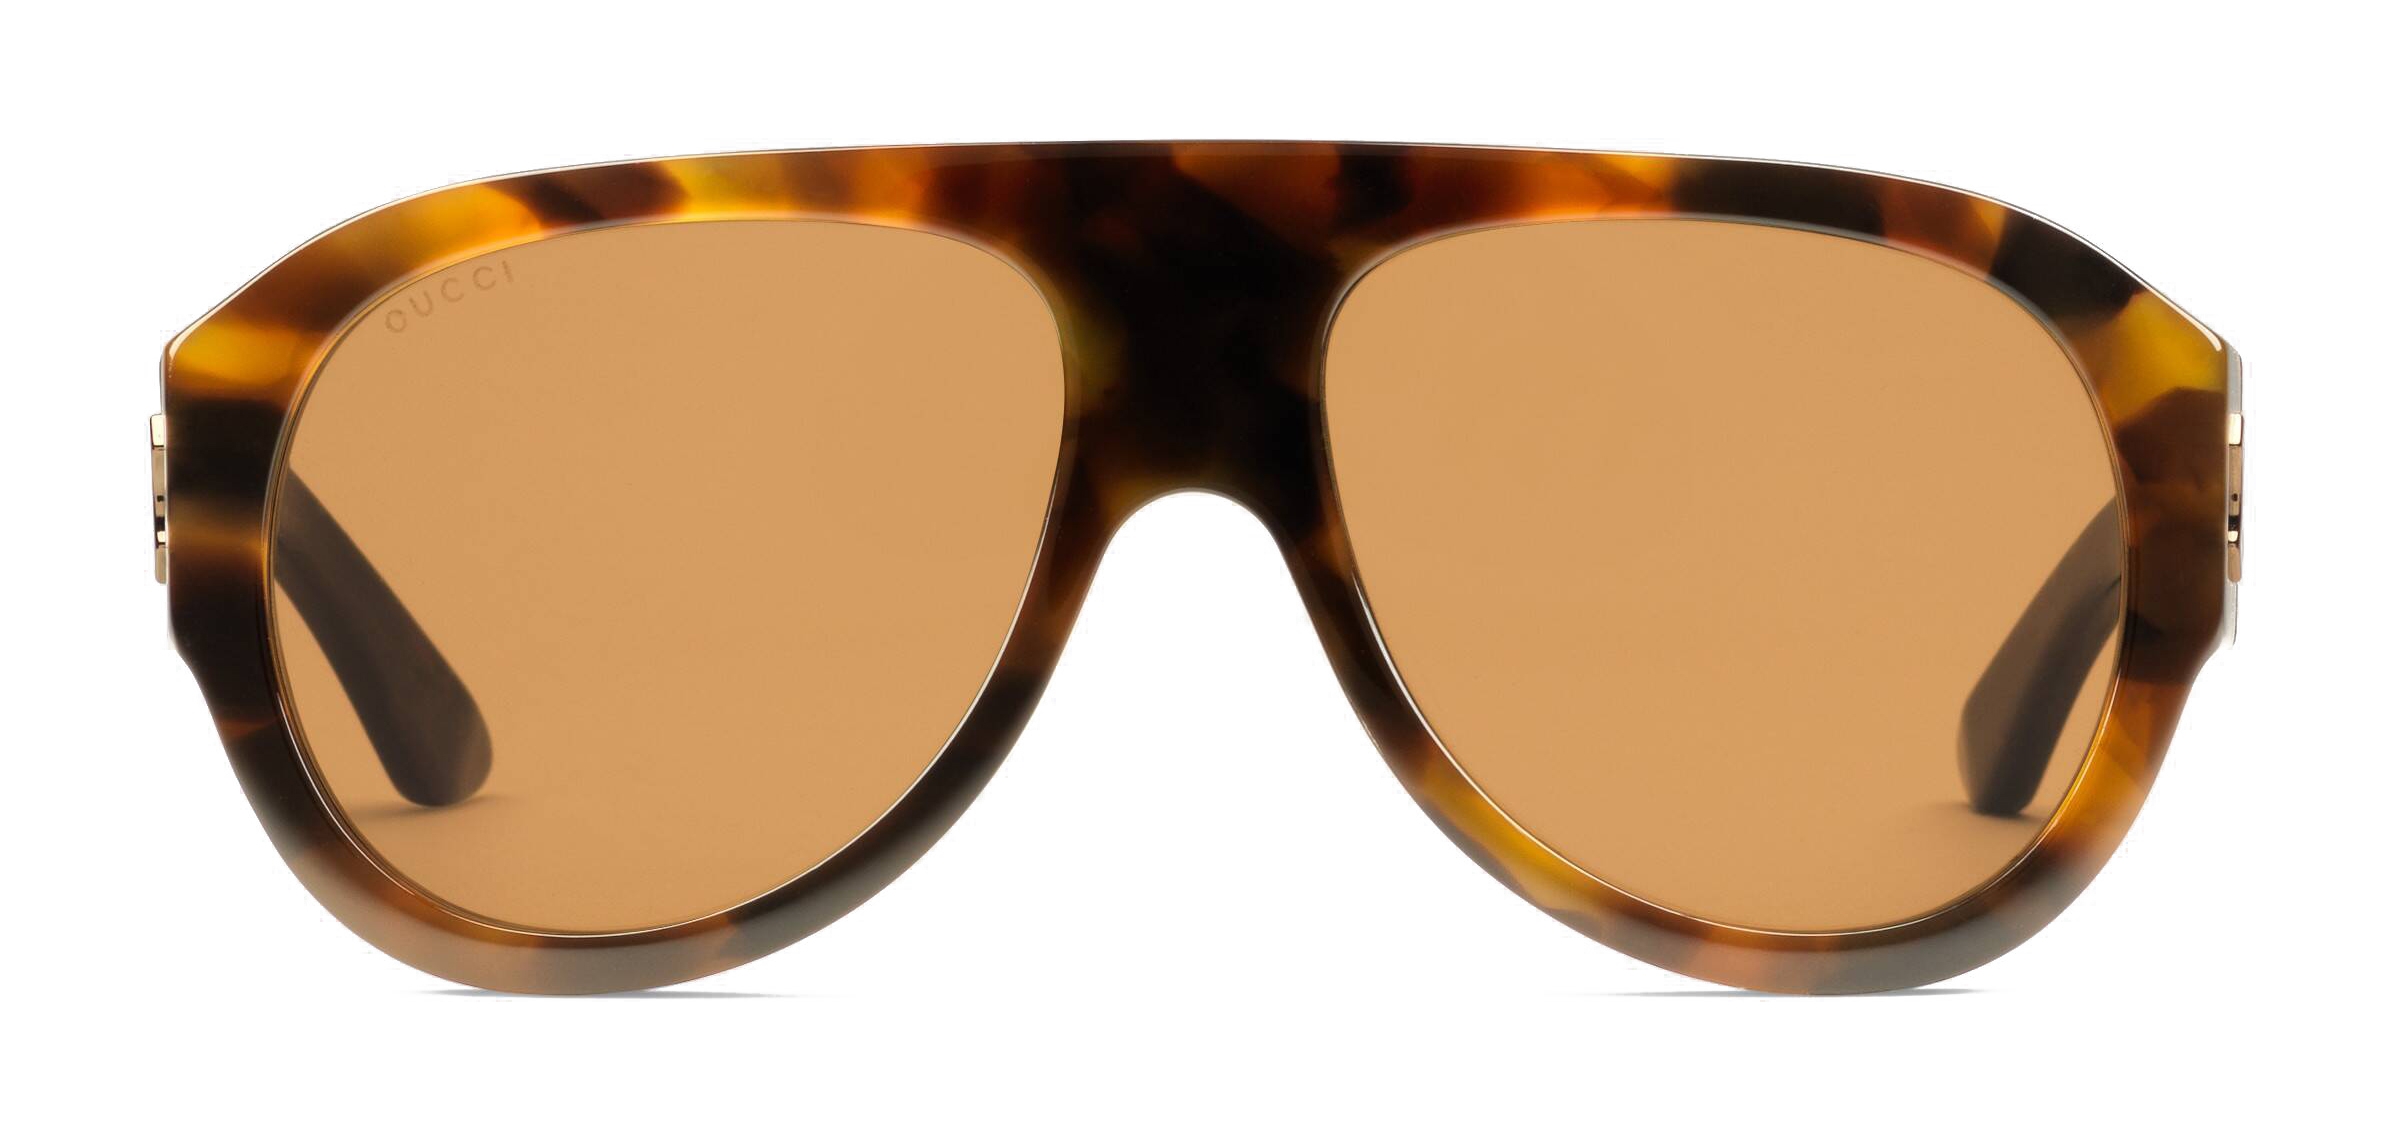 gucci tortoise shell aviator sunglasses